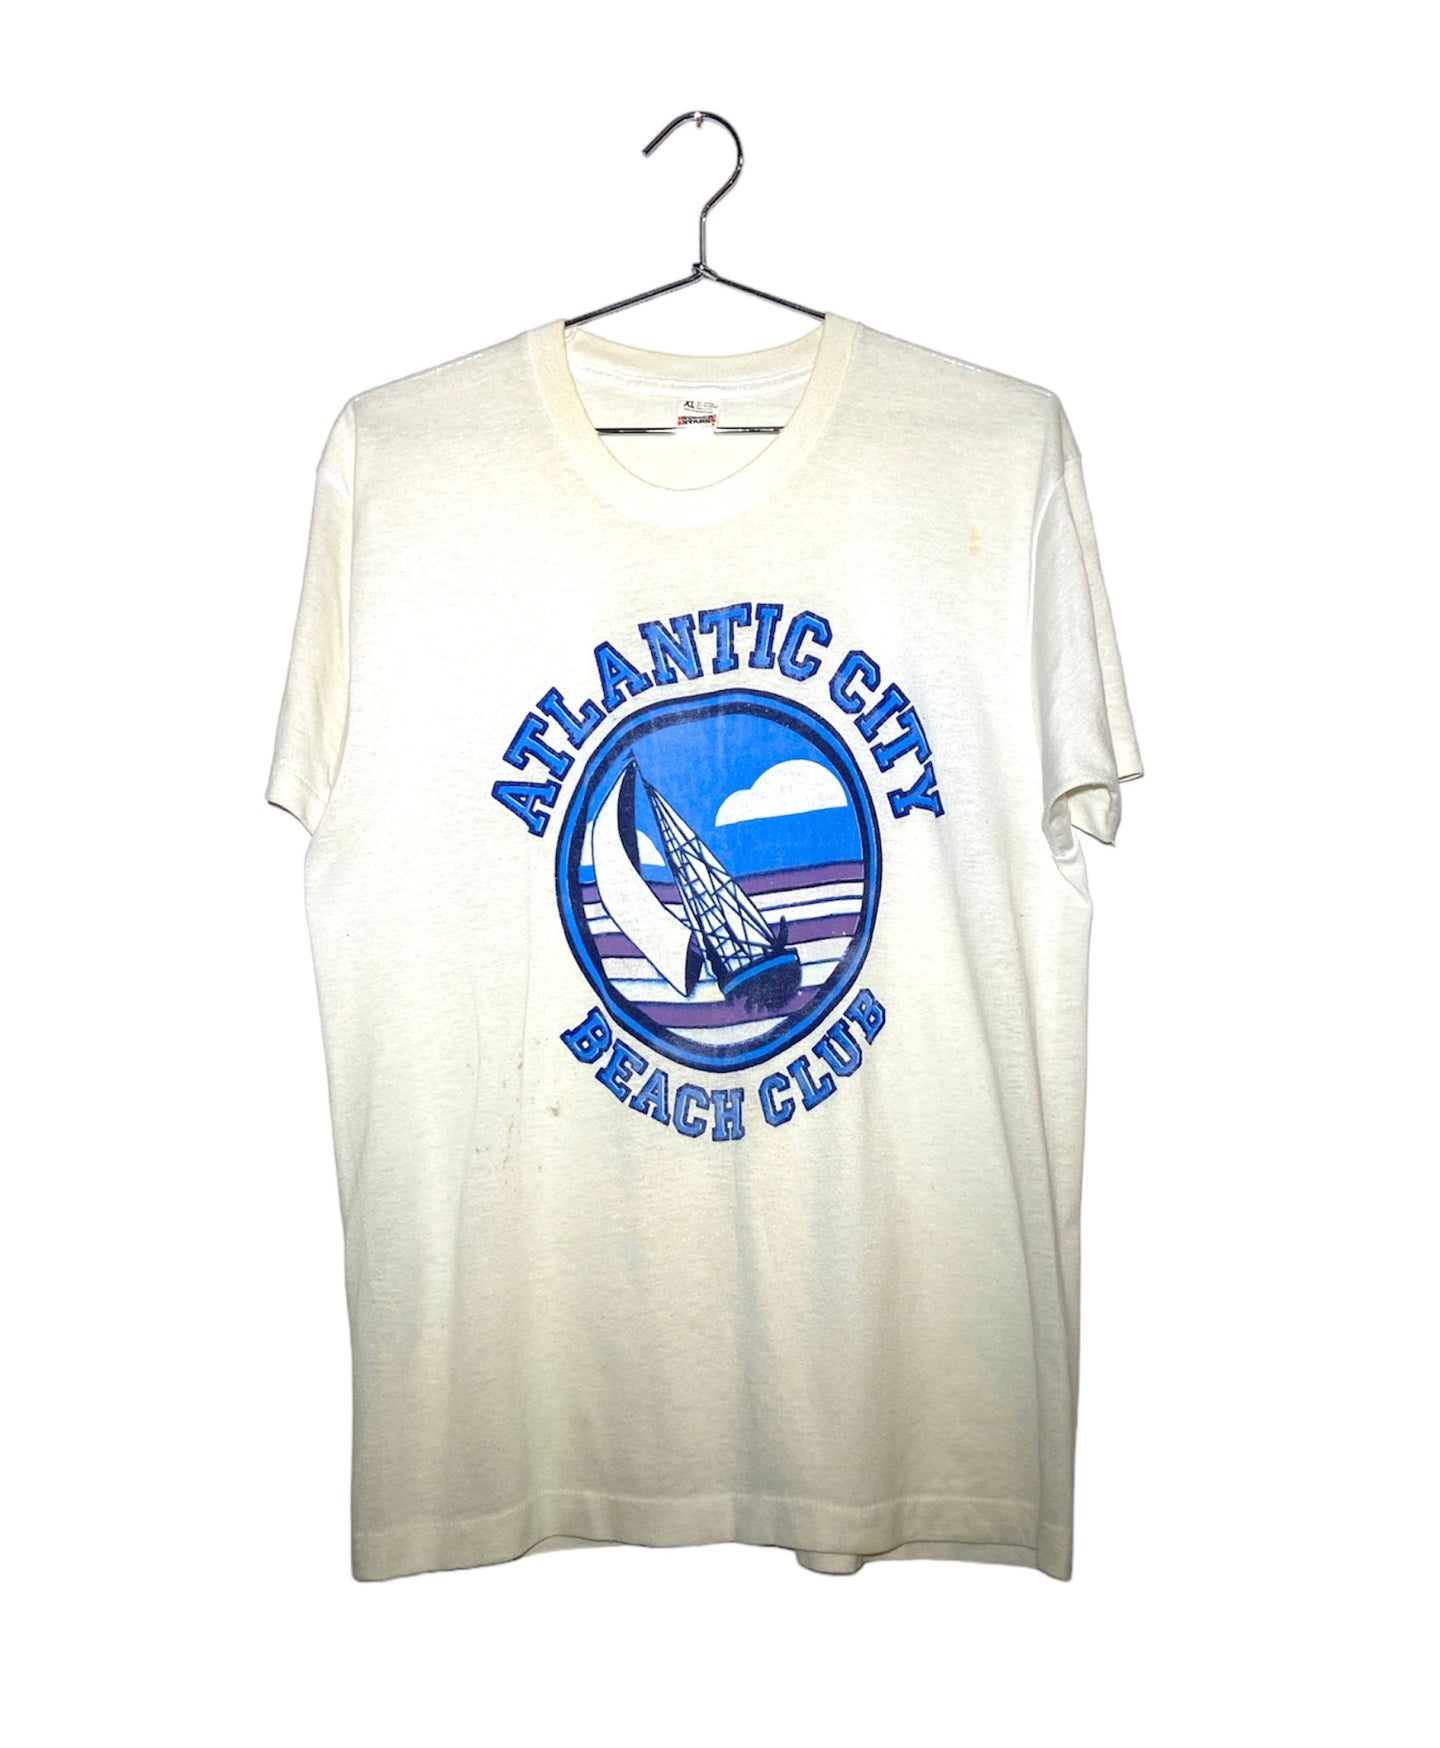 Vintage Atlantic City Beach Club Shirt